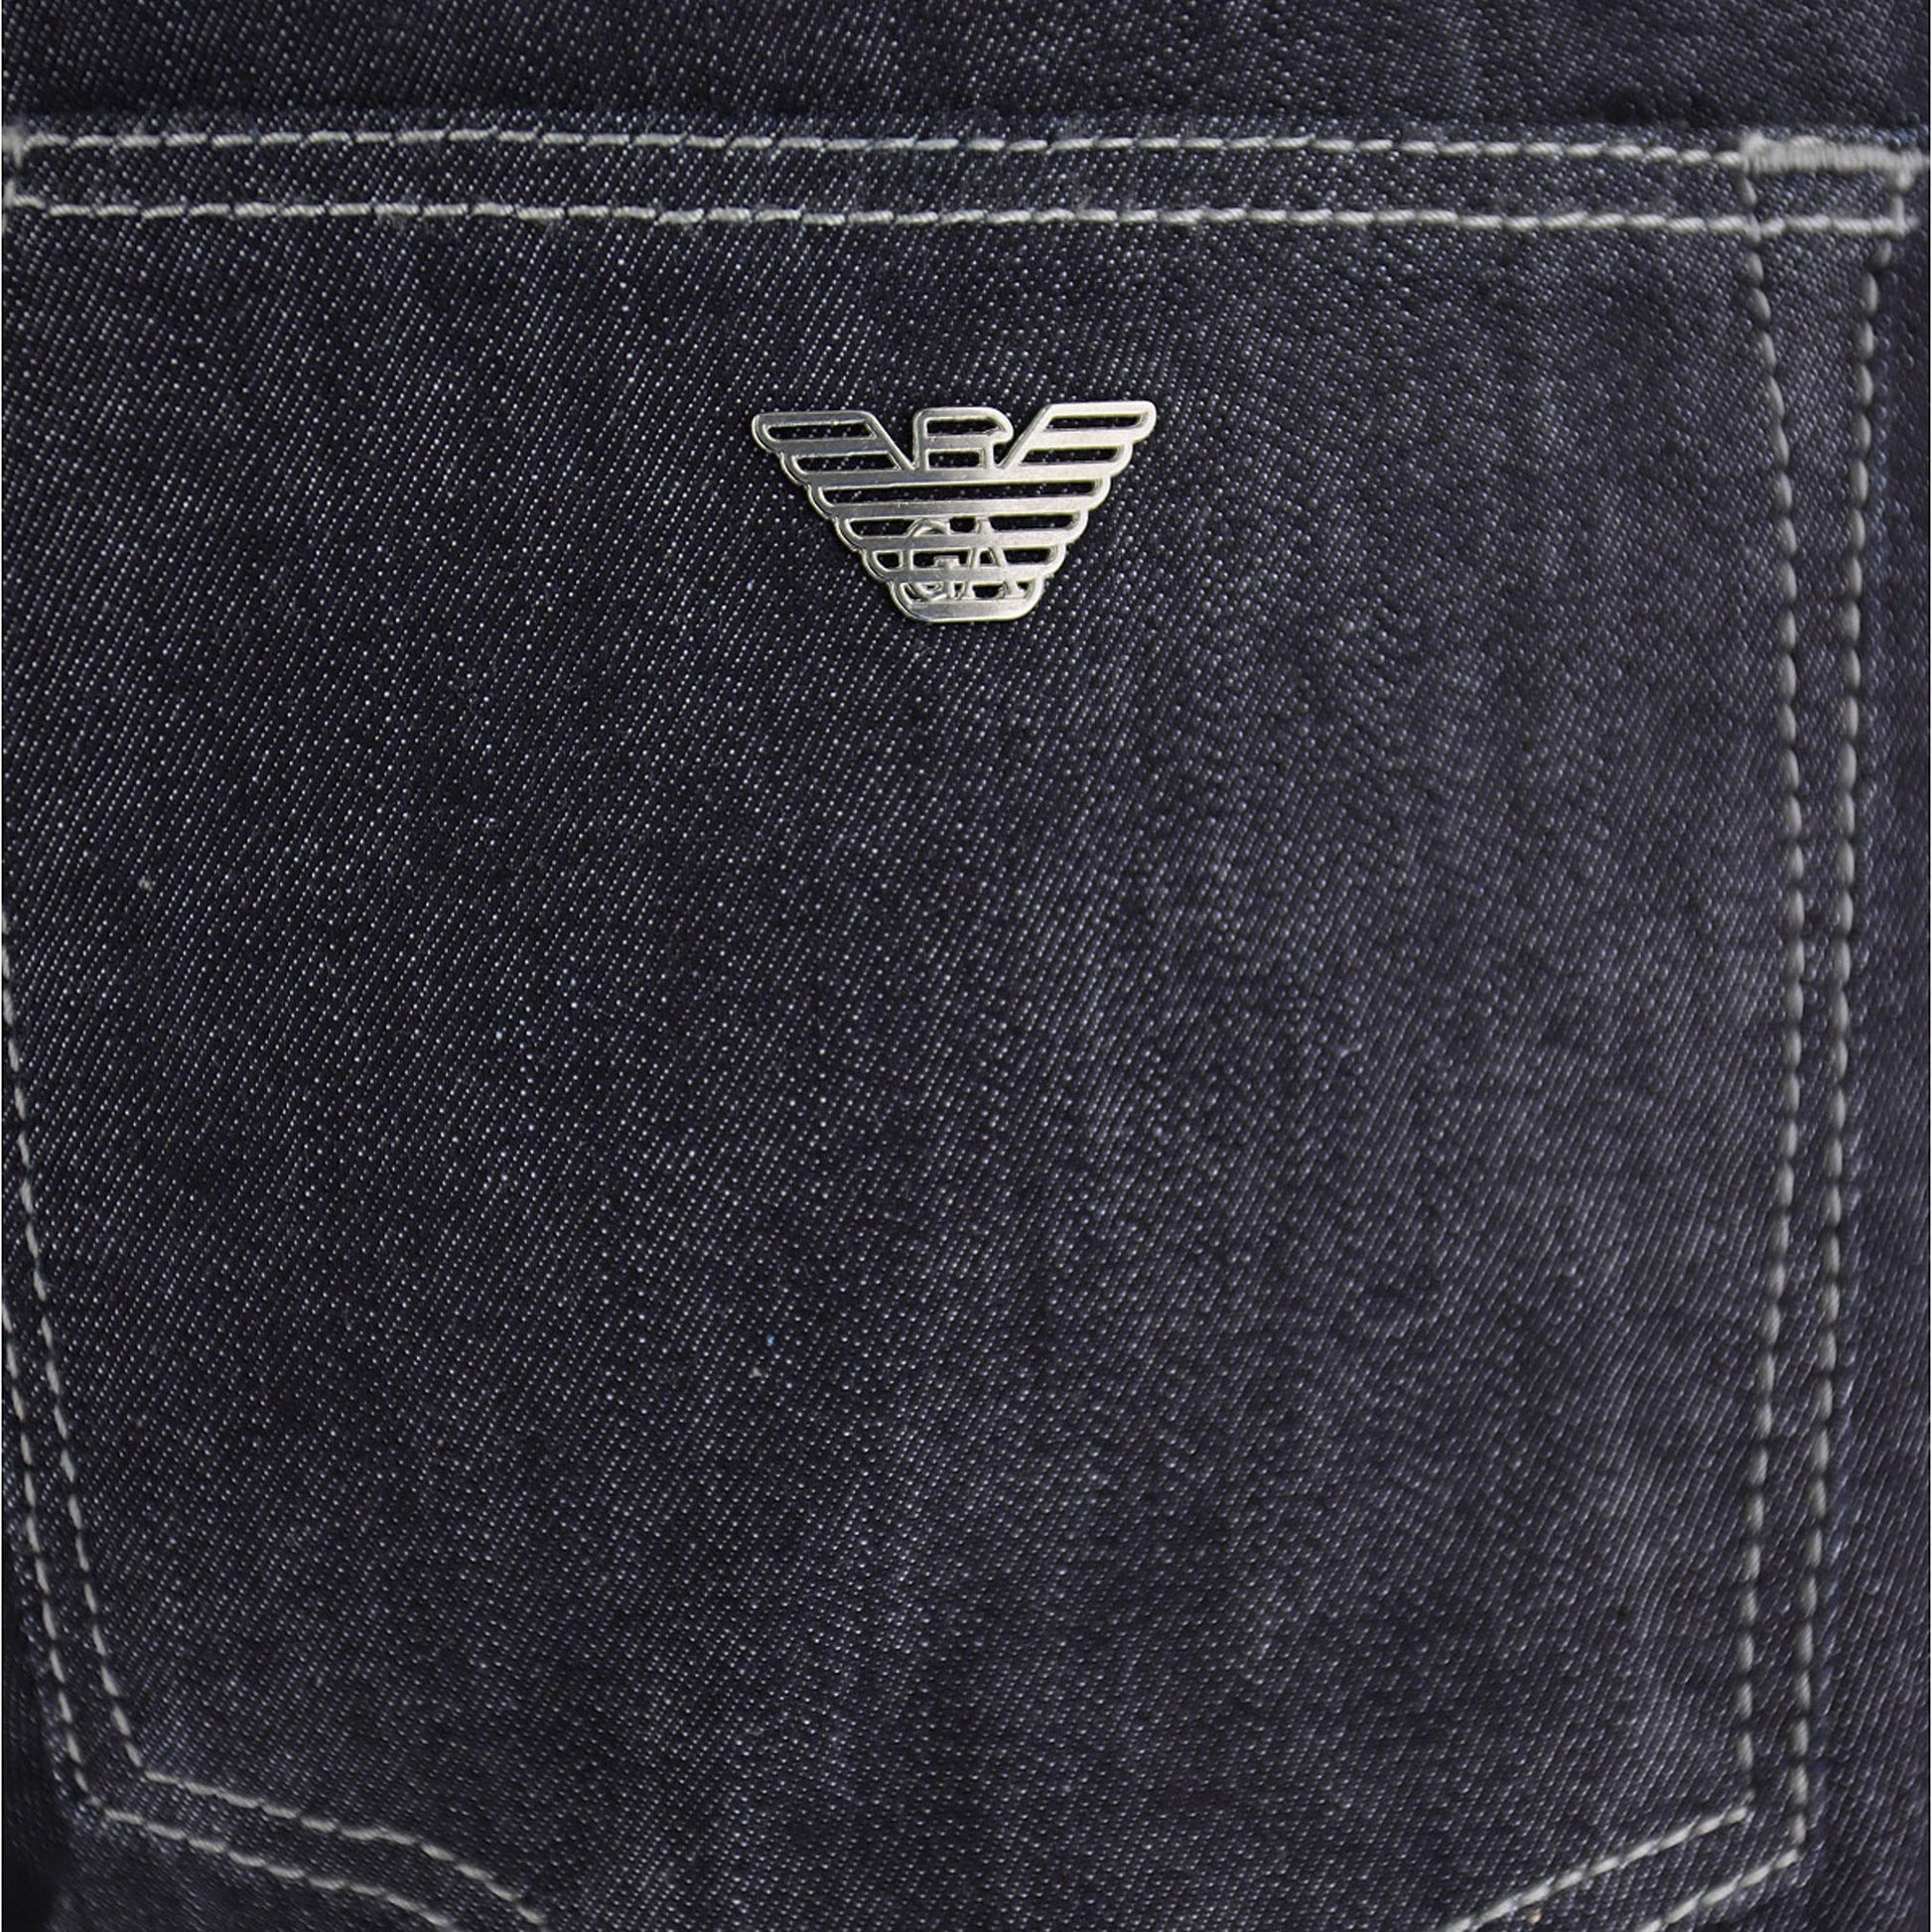 Emporio Armani 8N1J75 1D85Z Slim Fit Jeans - 0941 Denim - Escape Menswear